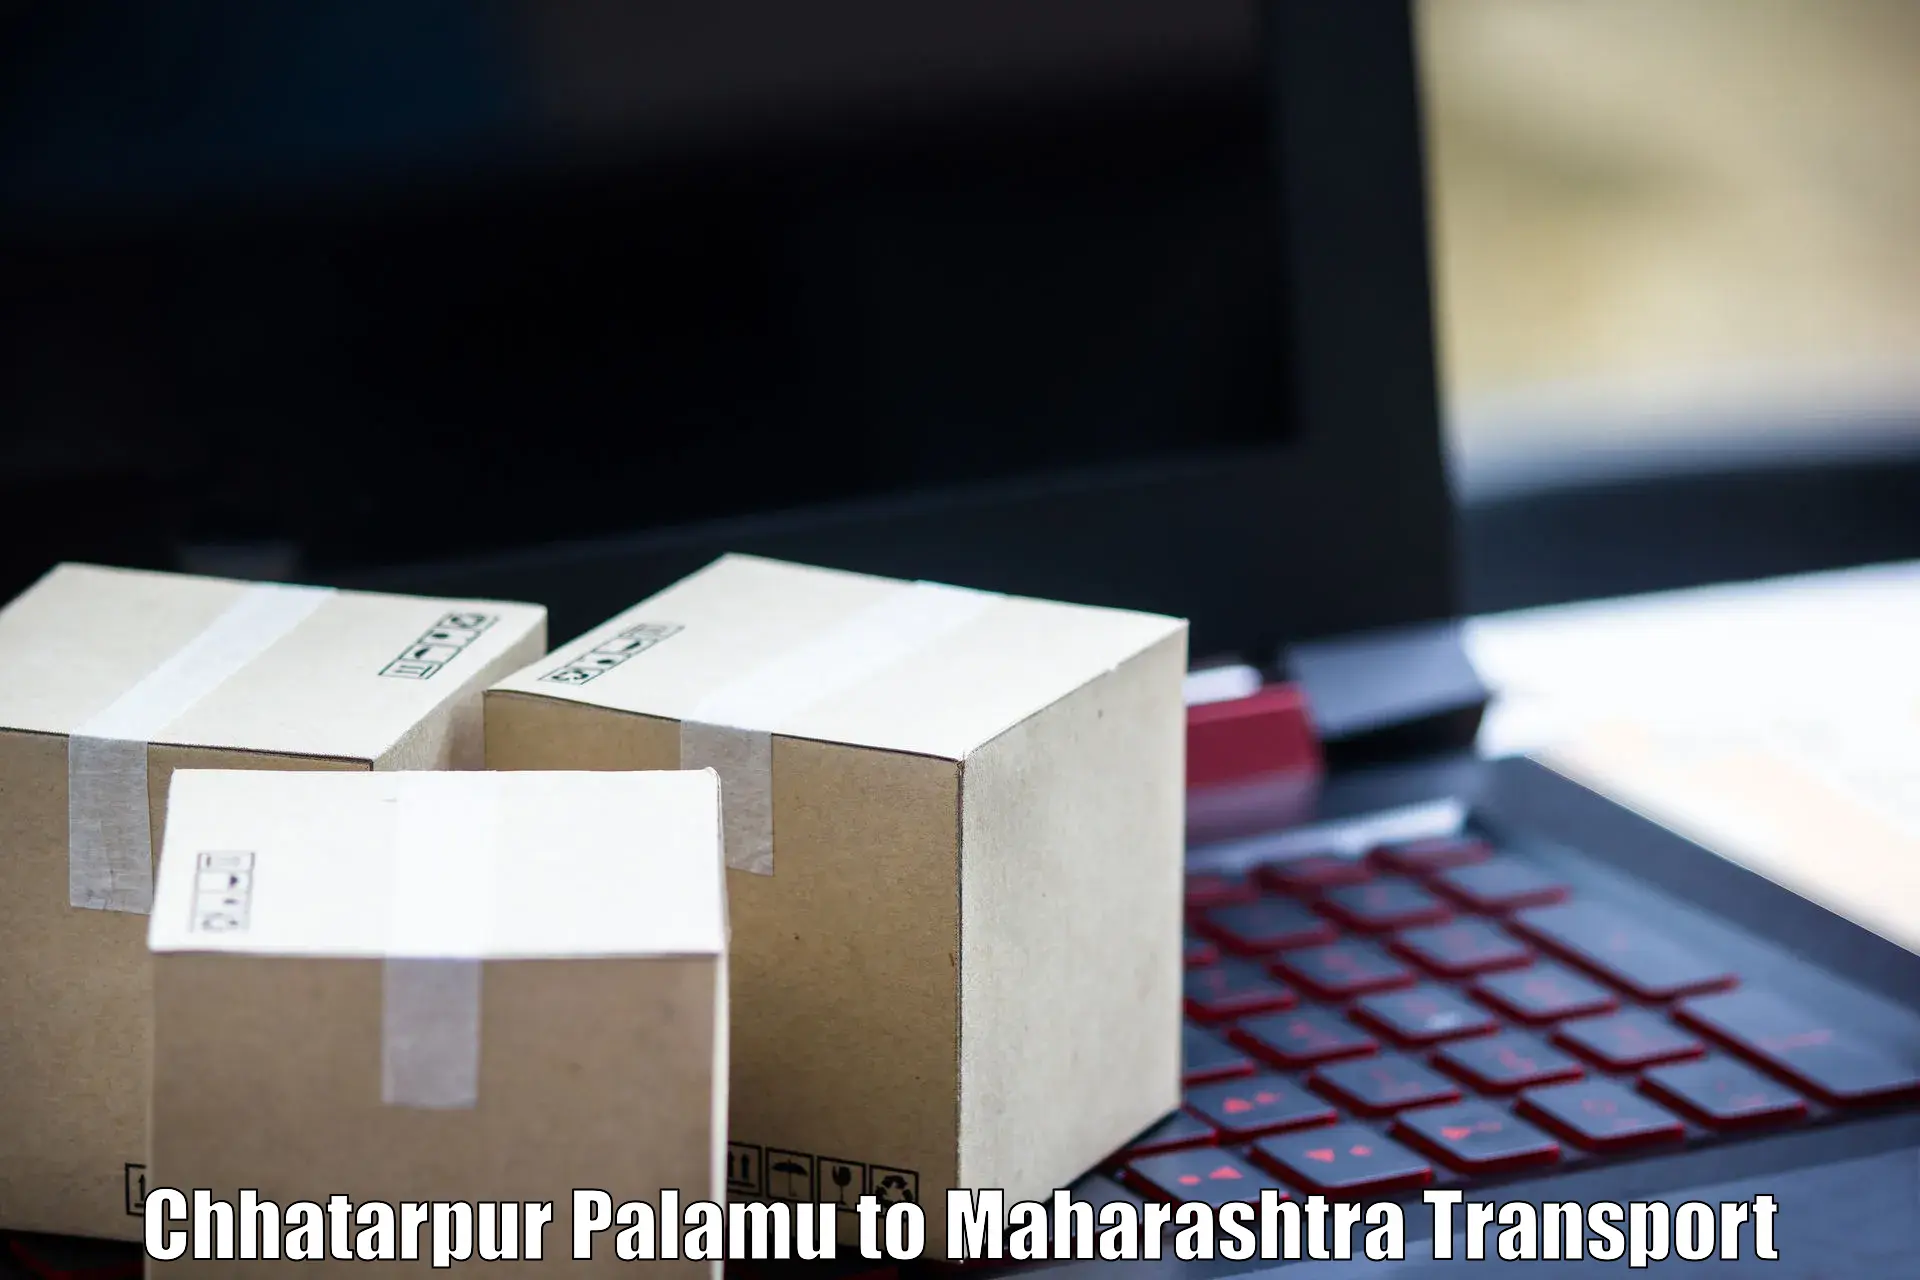 Pick up transport service Chhatarpur Palamu to Ratnagiri